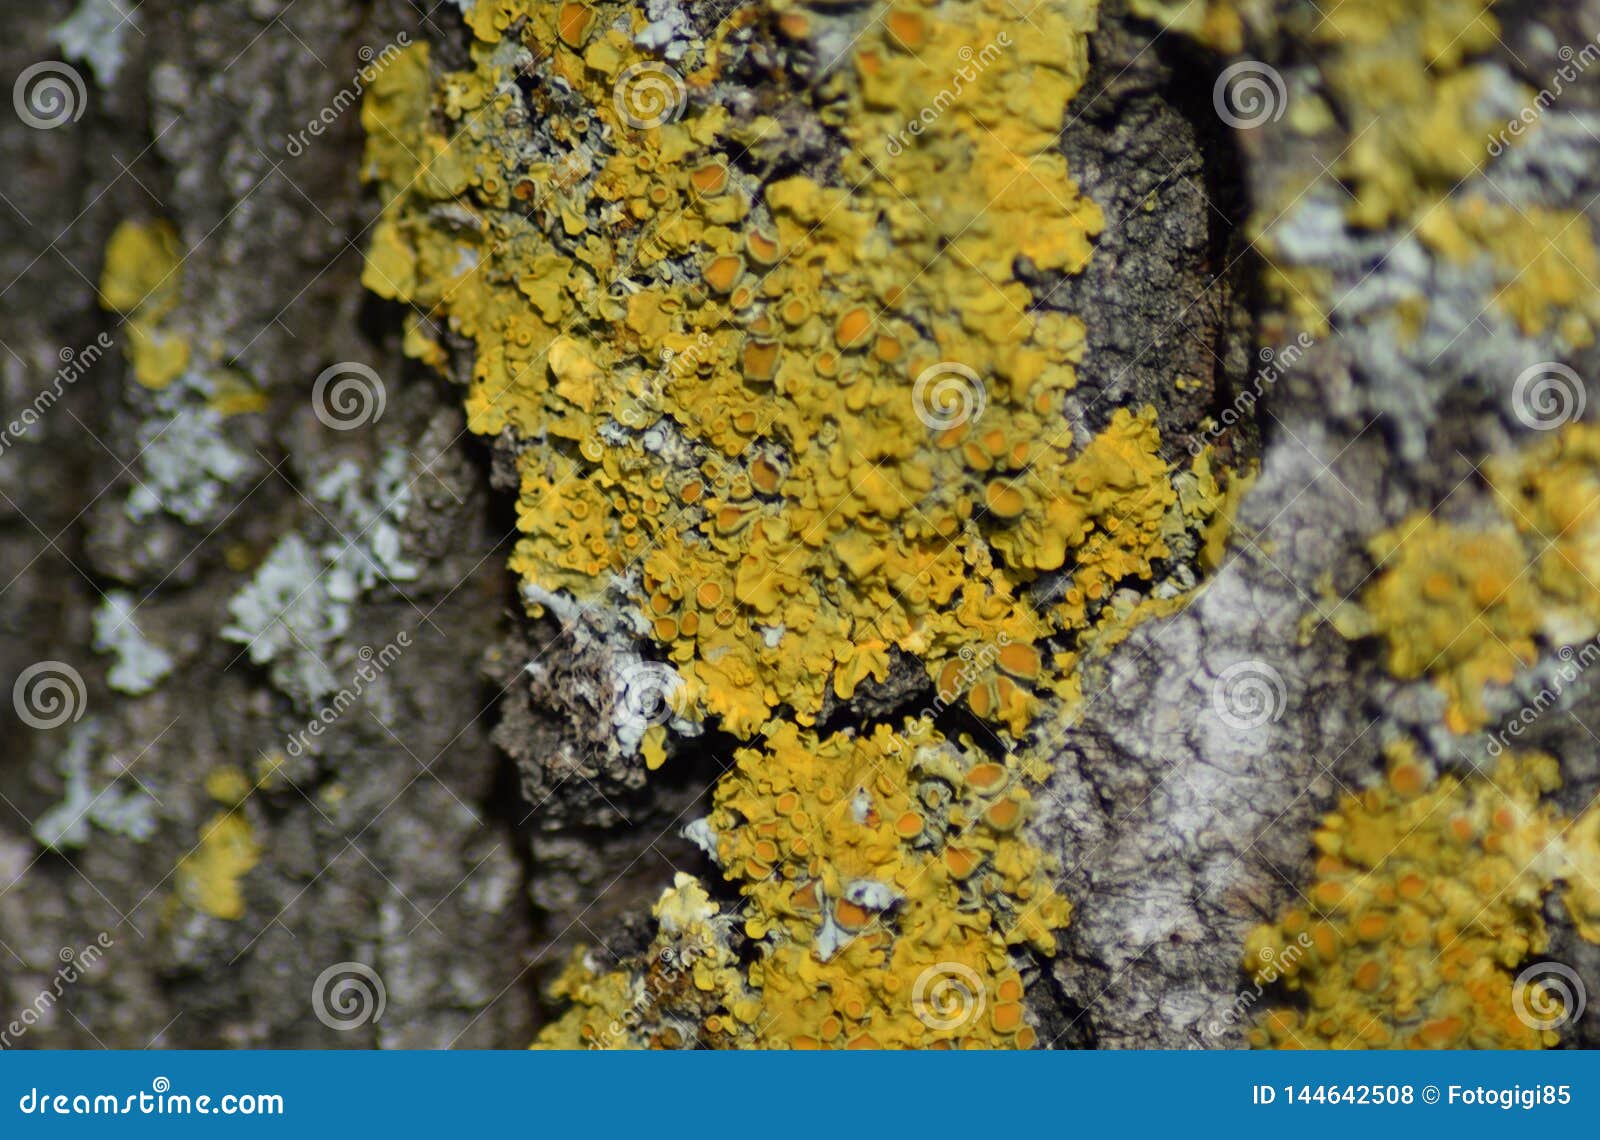 yellow lichen on tree bark